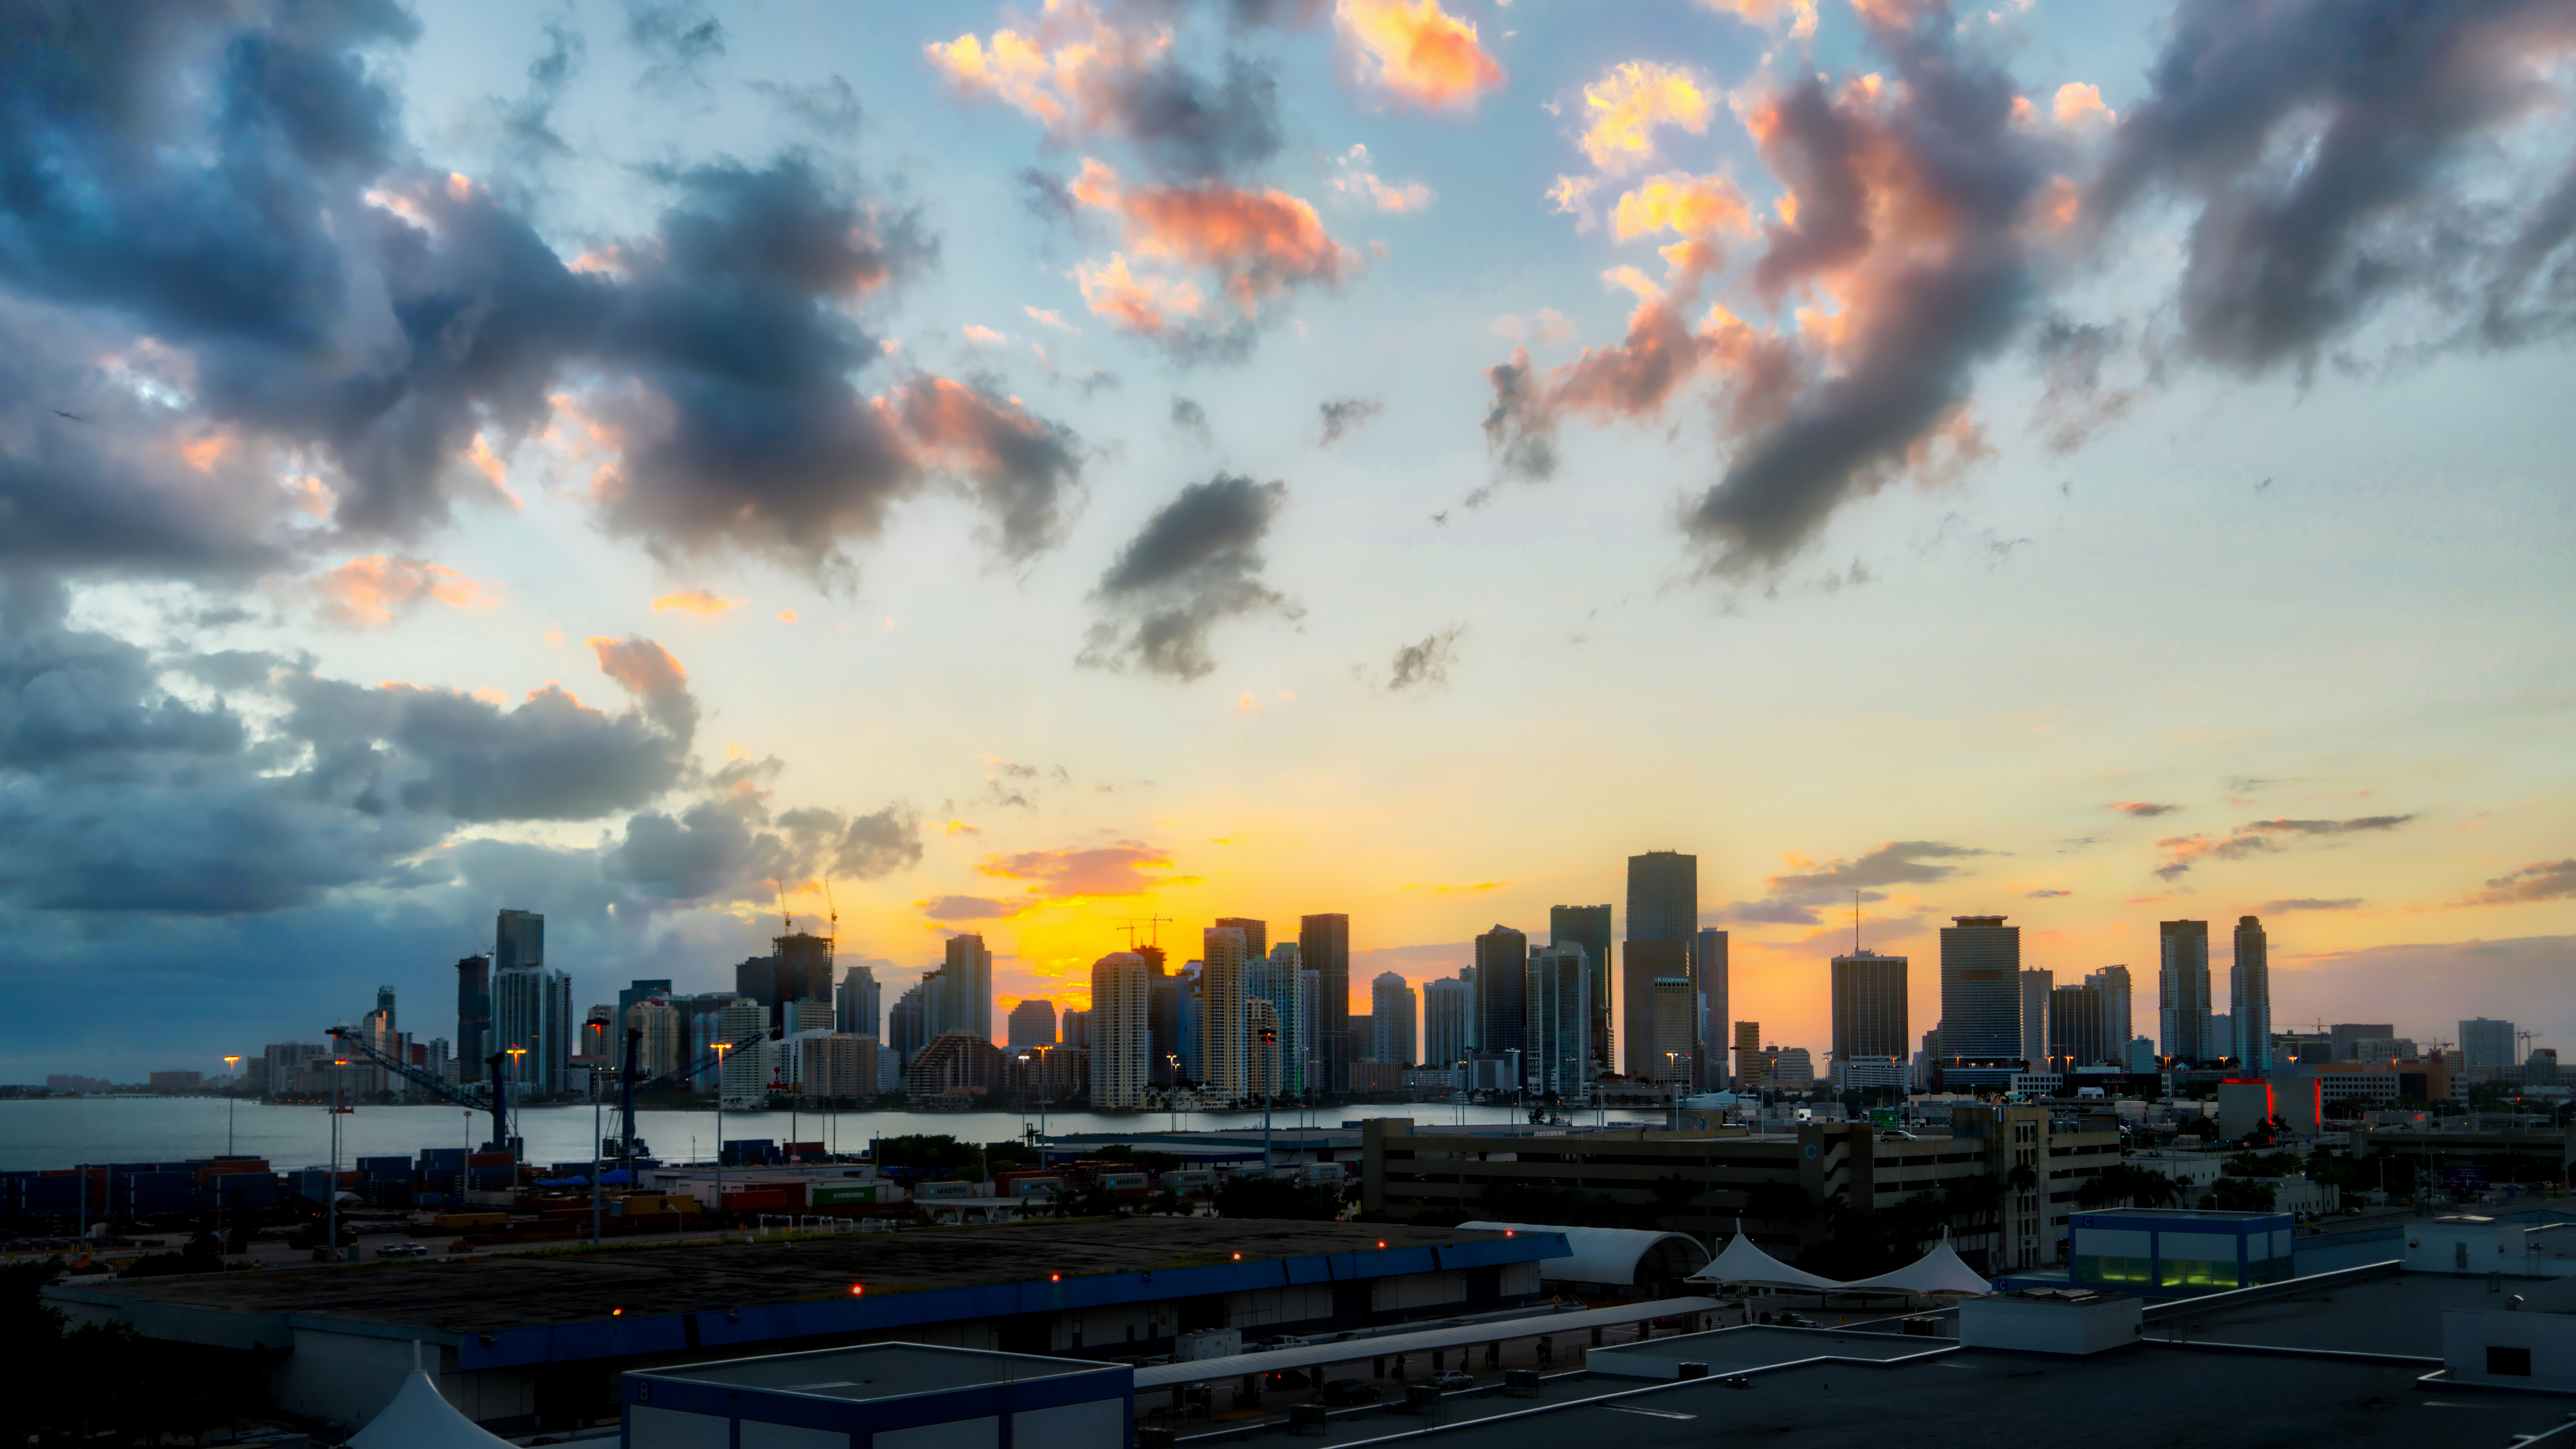 Photography Trey Ratcliff USA Florida Miami Cityscape Building Scyscrapers Clouds Sky 7680x4320